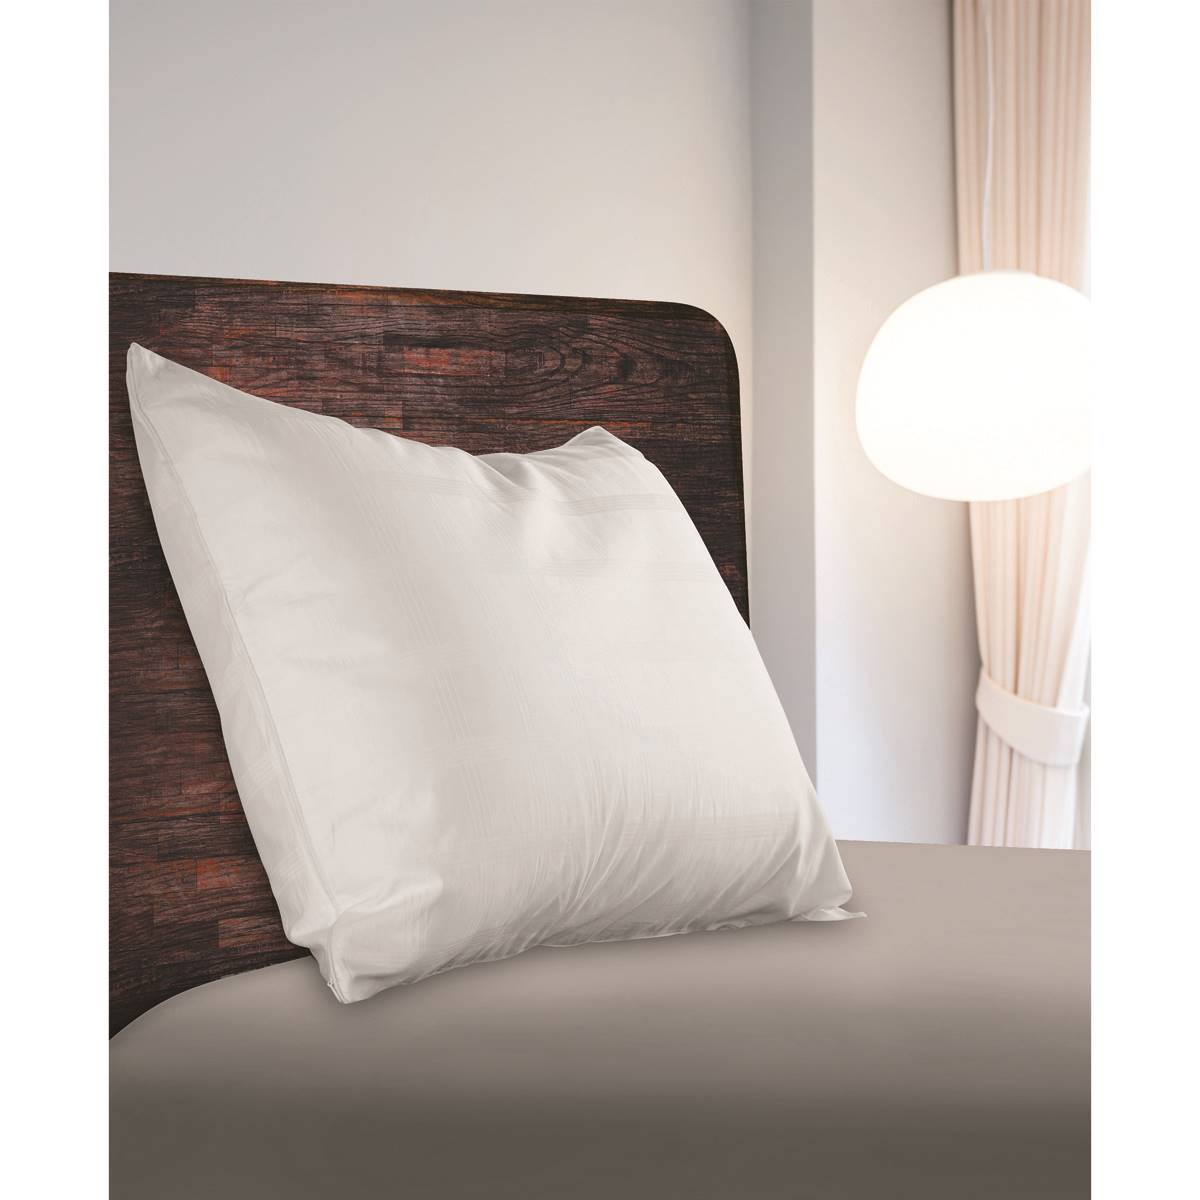 Sealy(R) Elite Luxury Pillow Protector